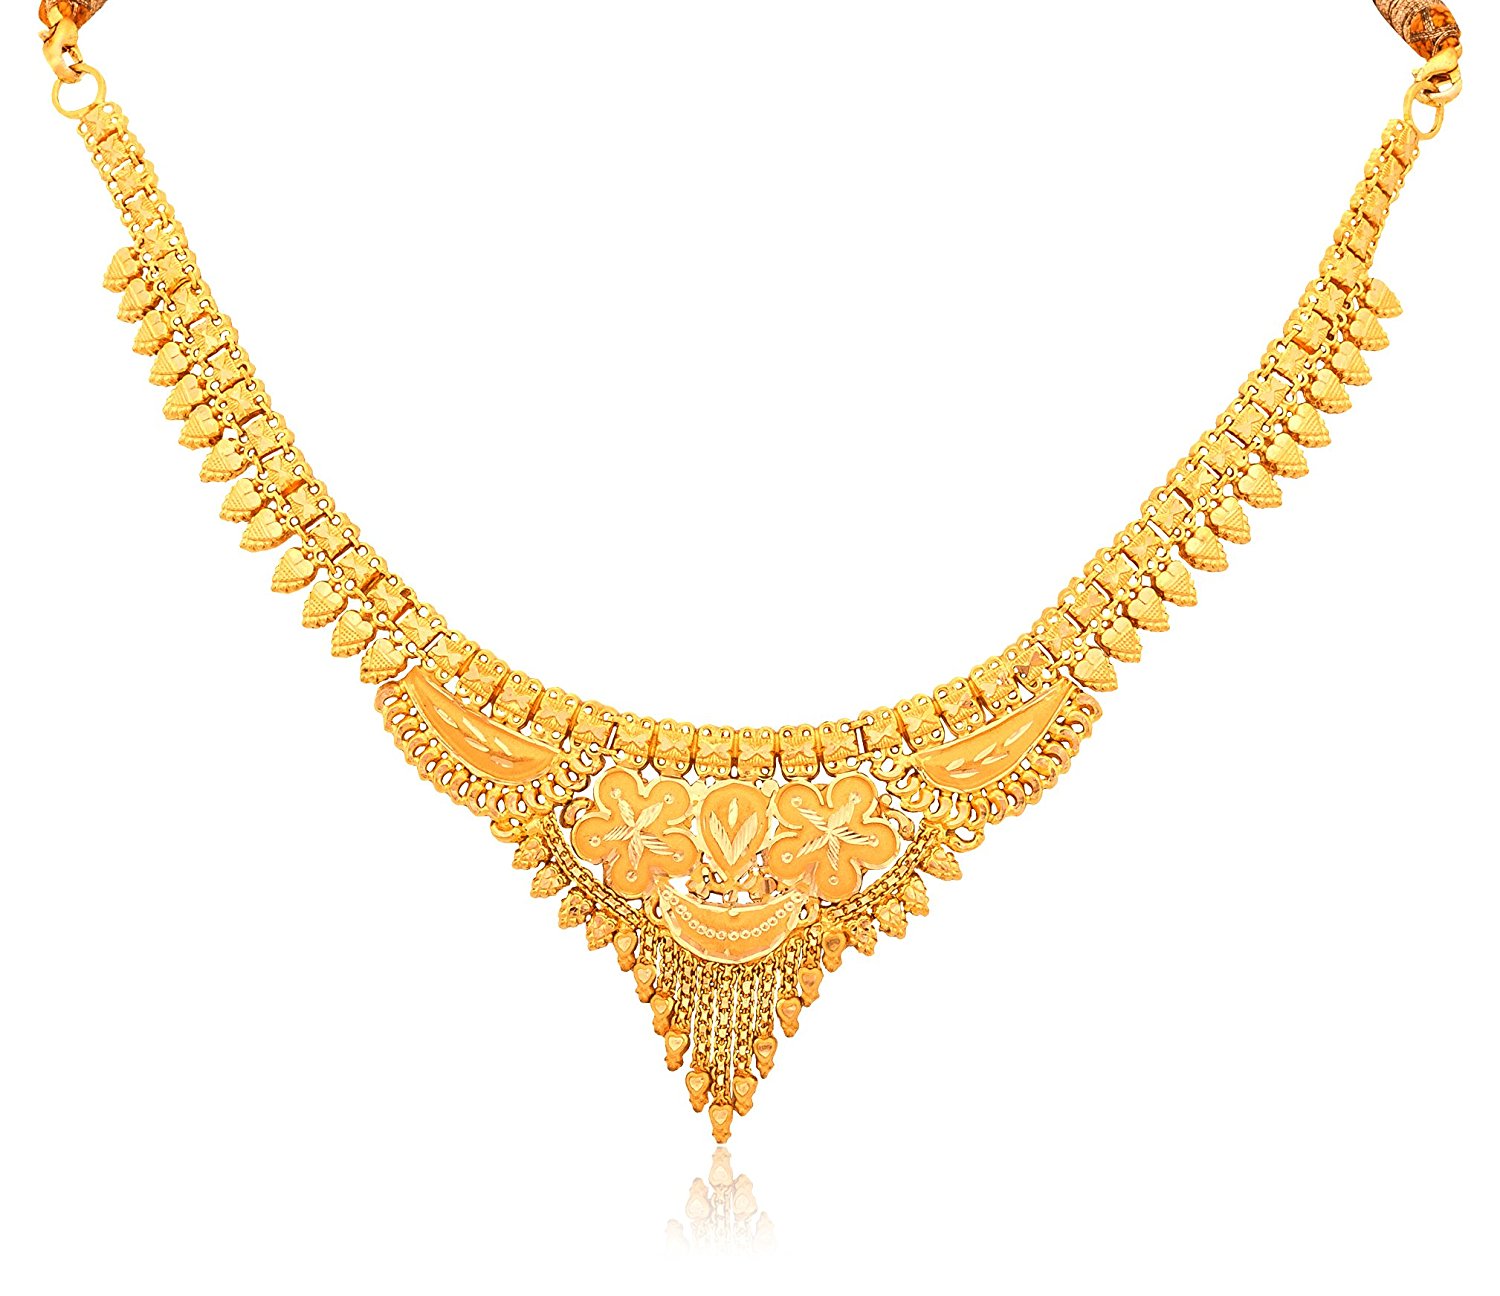 golden necklace new design images